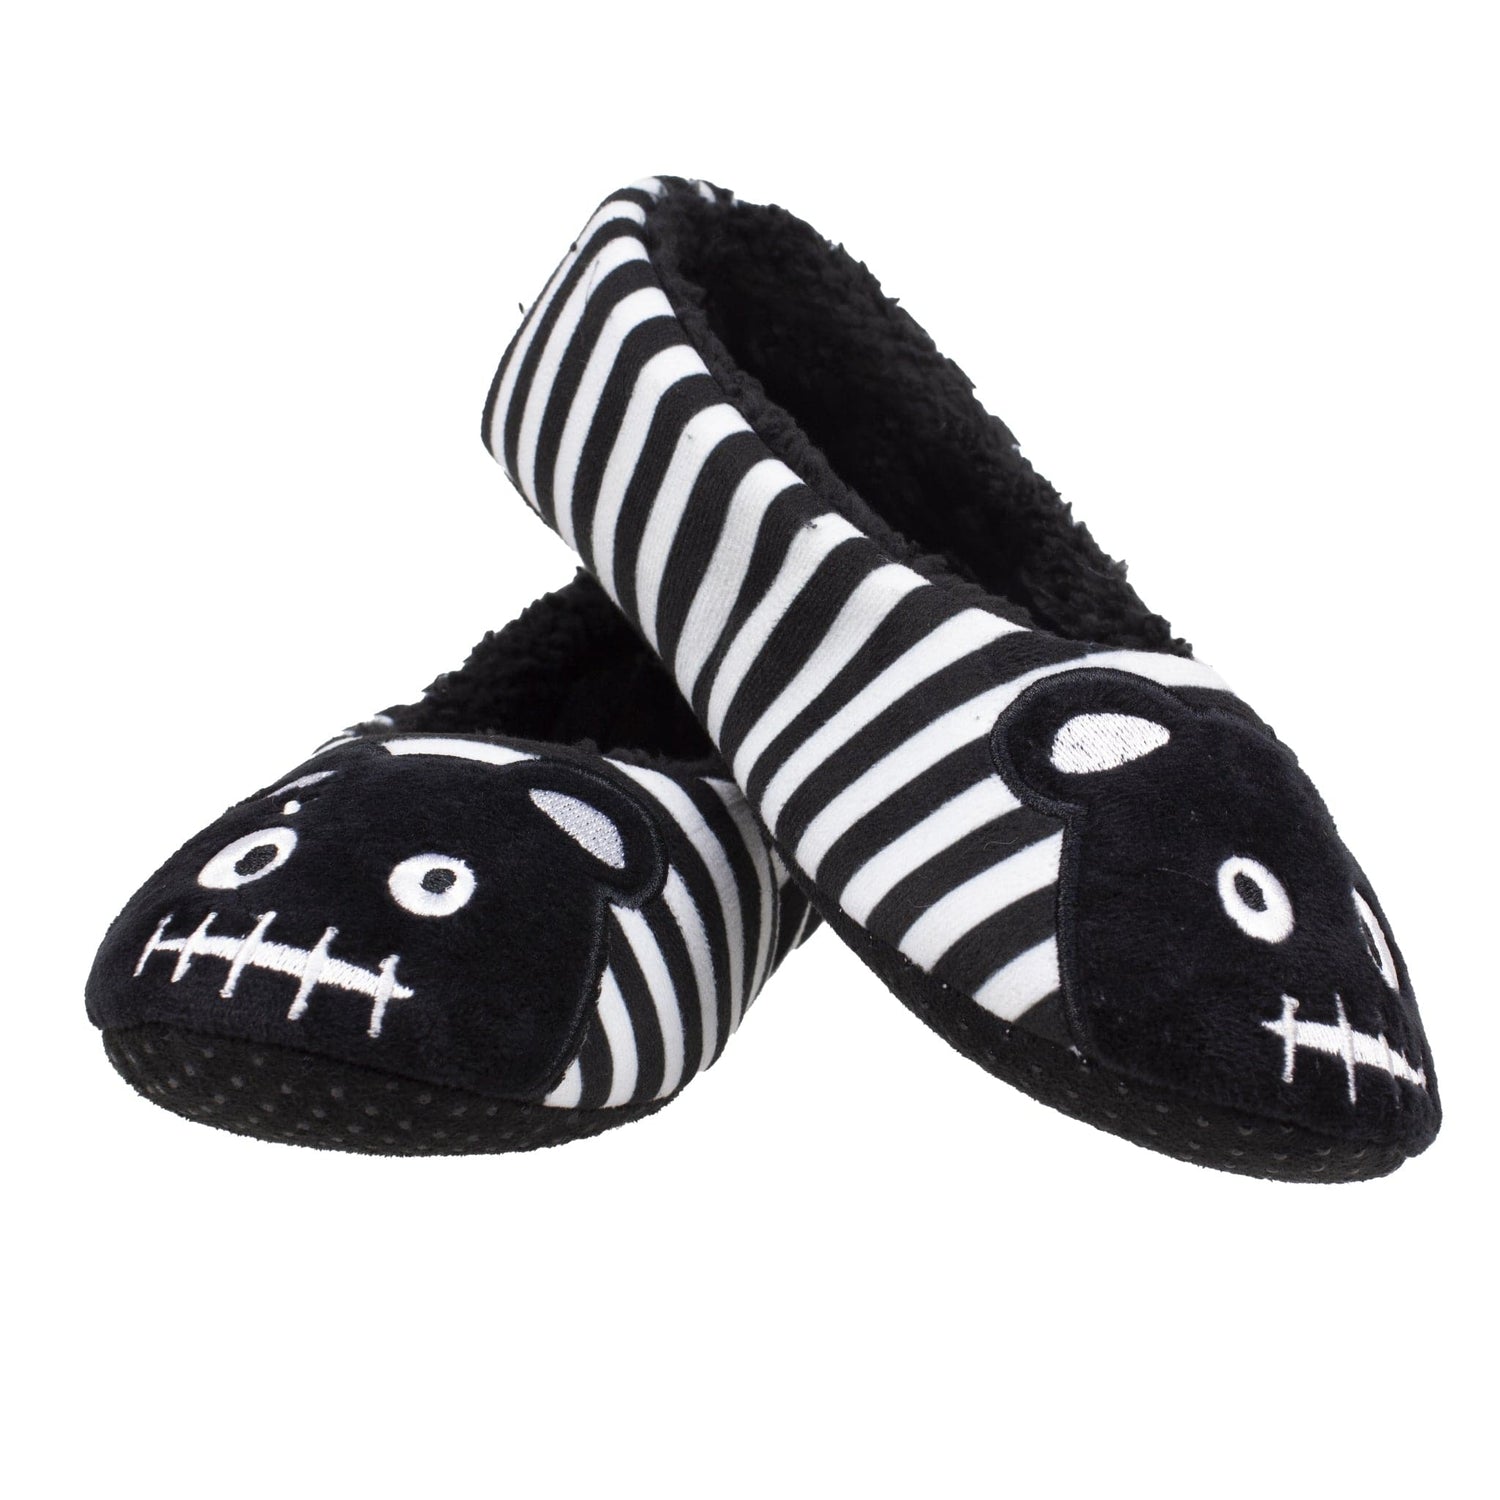 TUK Shoes Slipper Black & White Stripe Punk Teddy